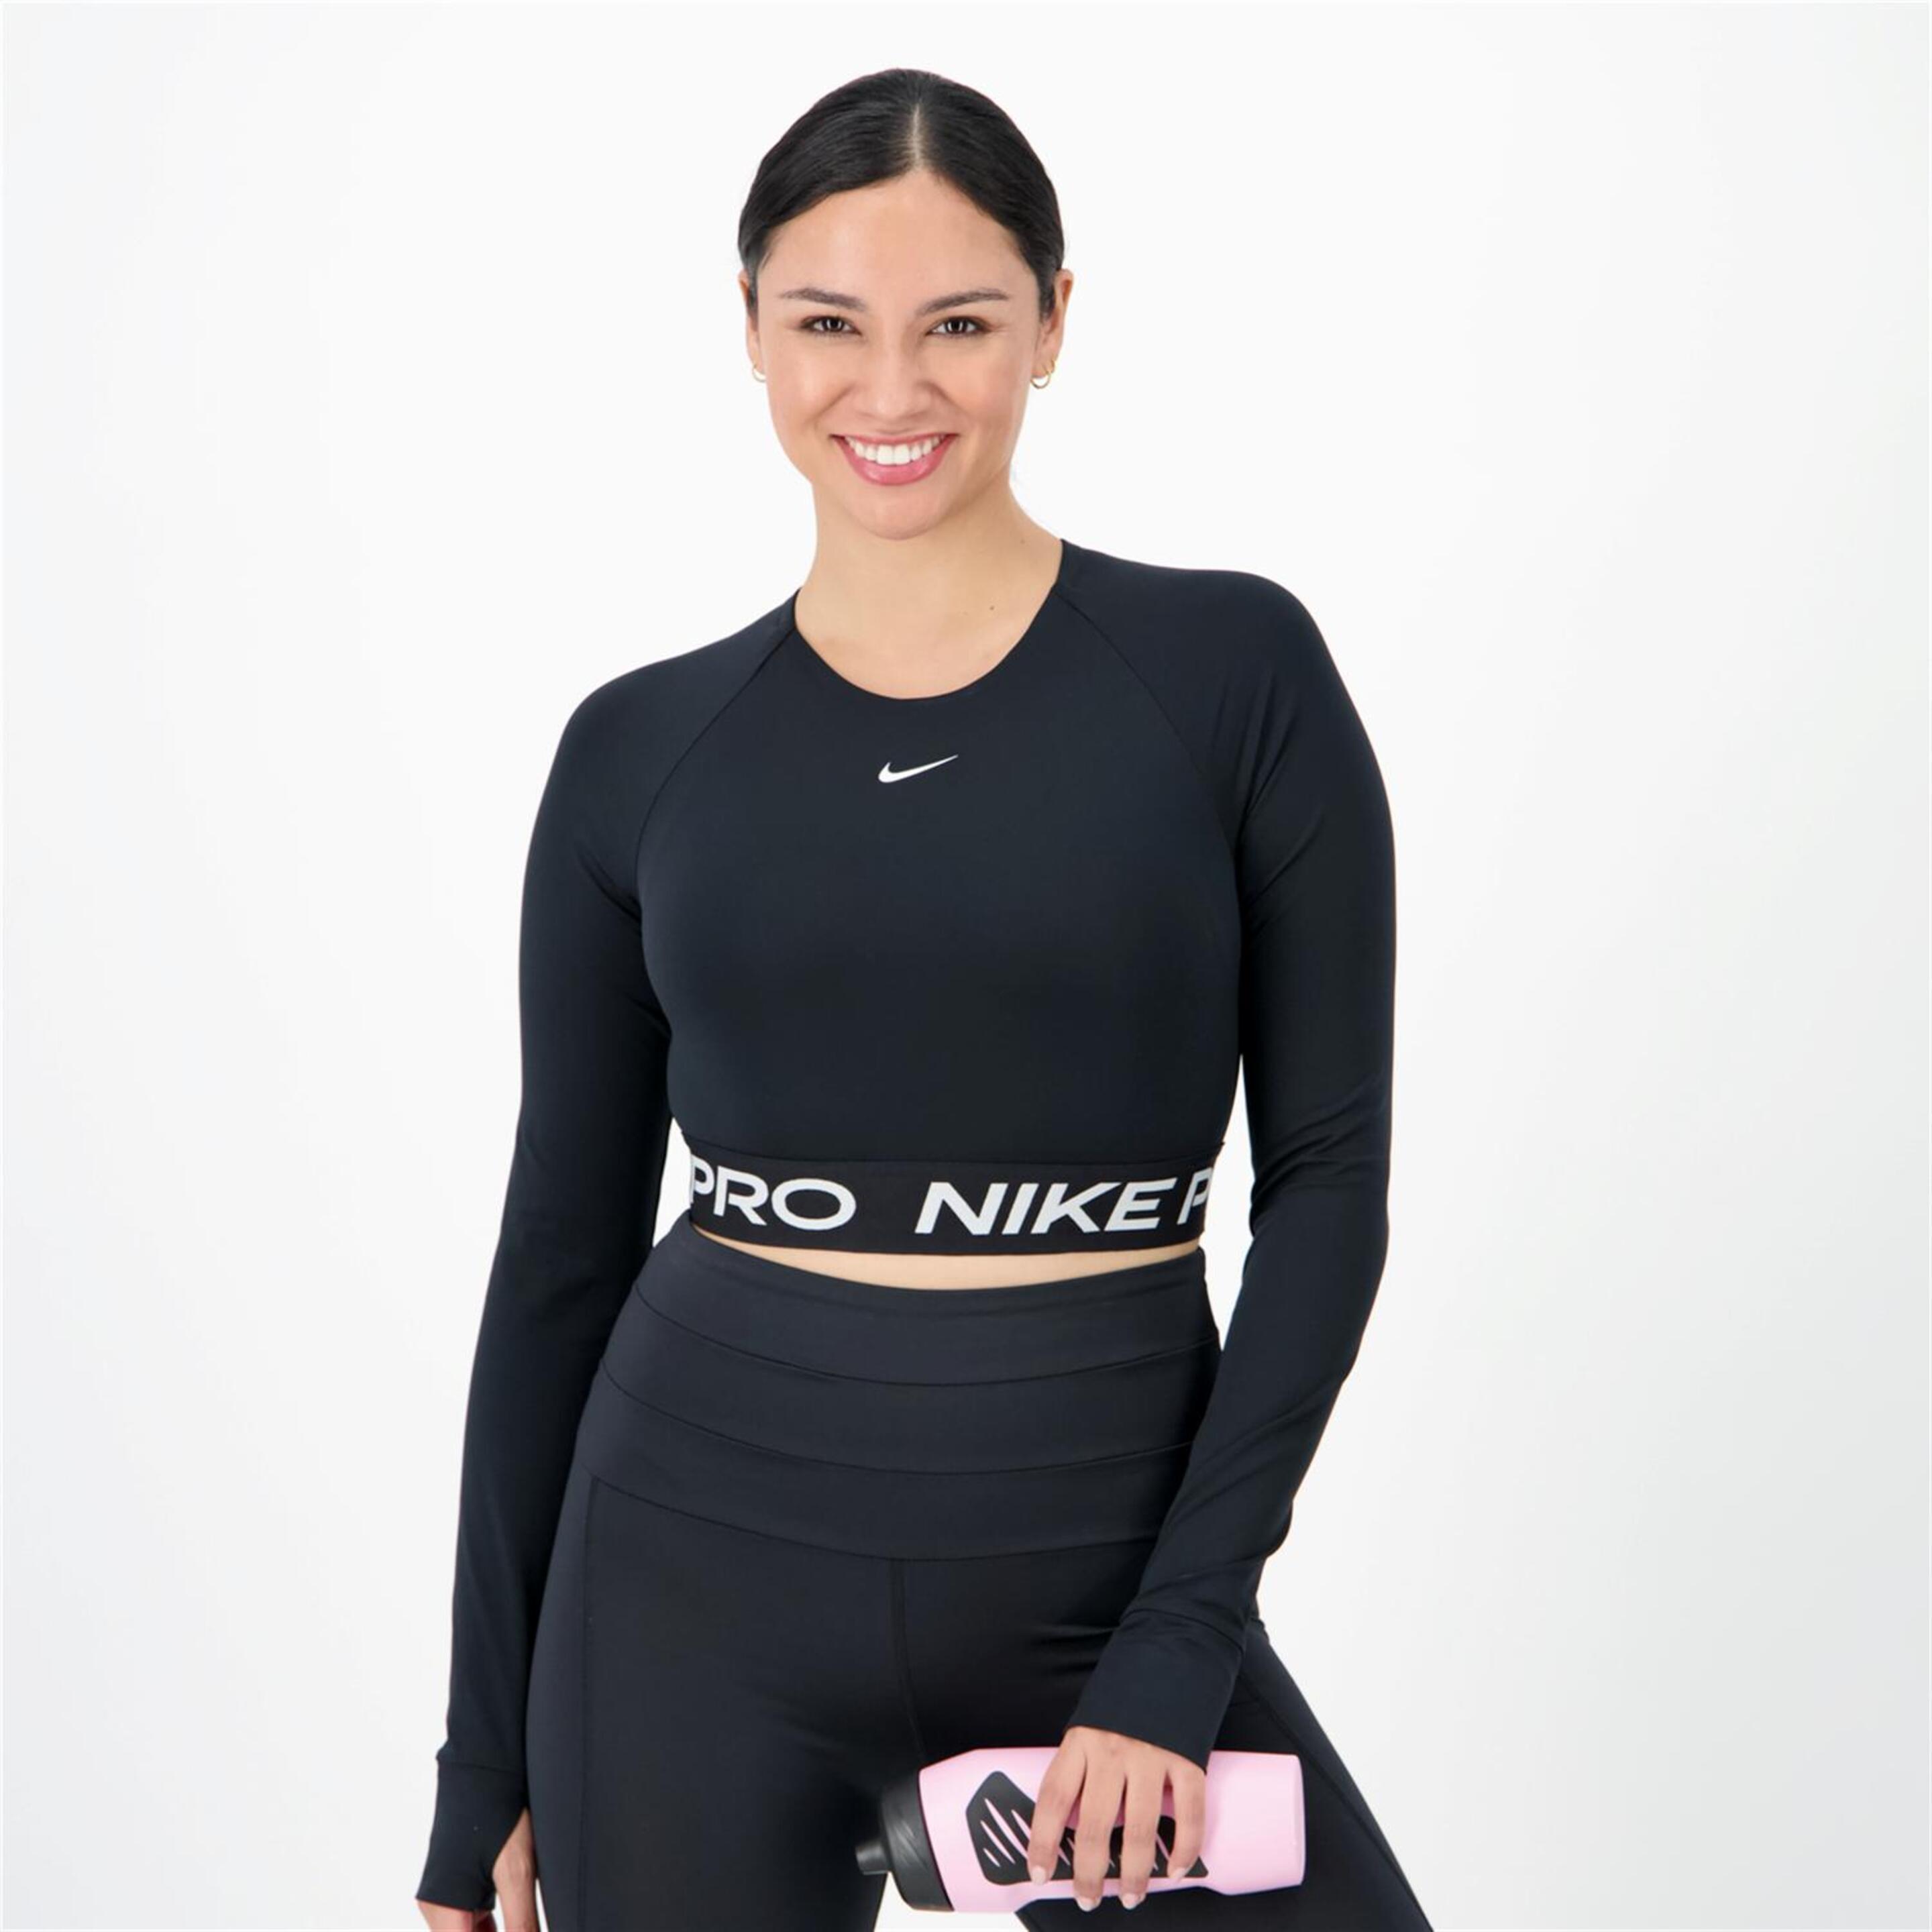 Nike Pro - negro - Camiseta Fitness Mujer